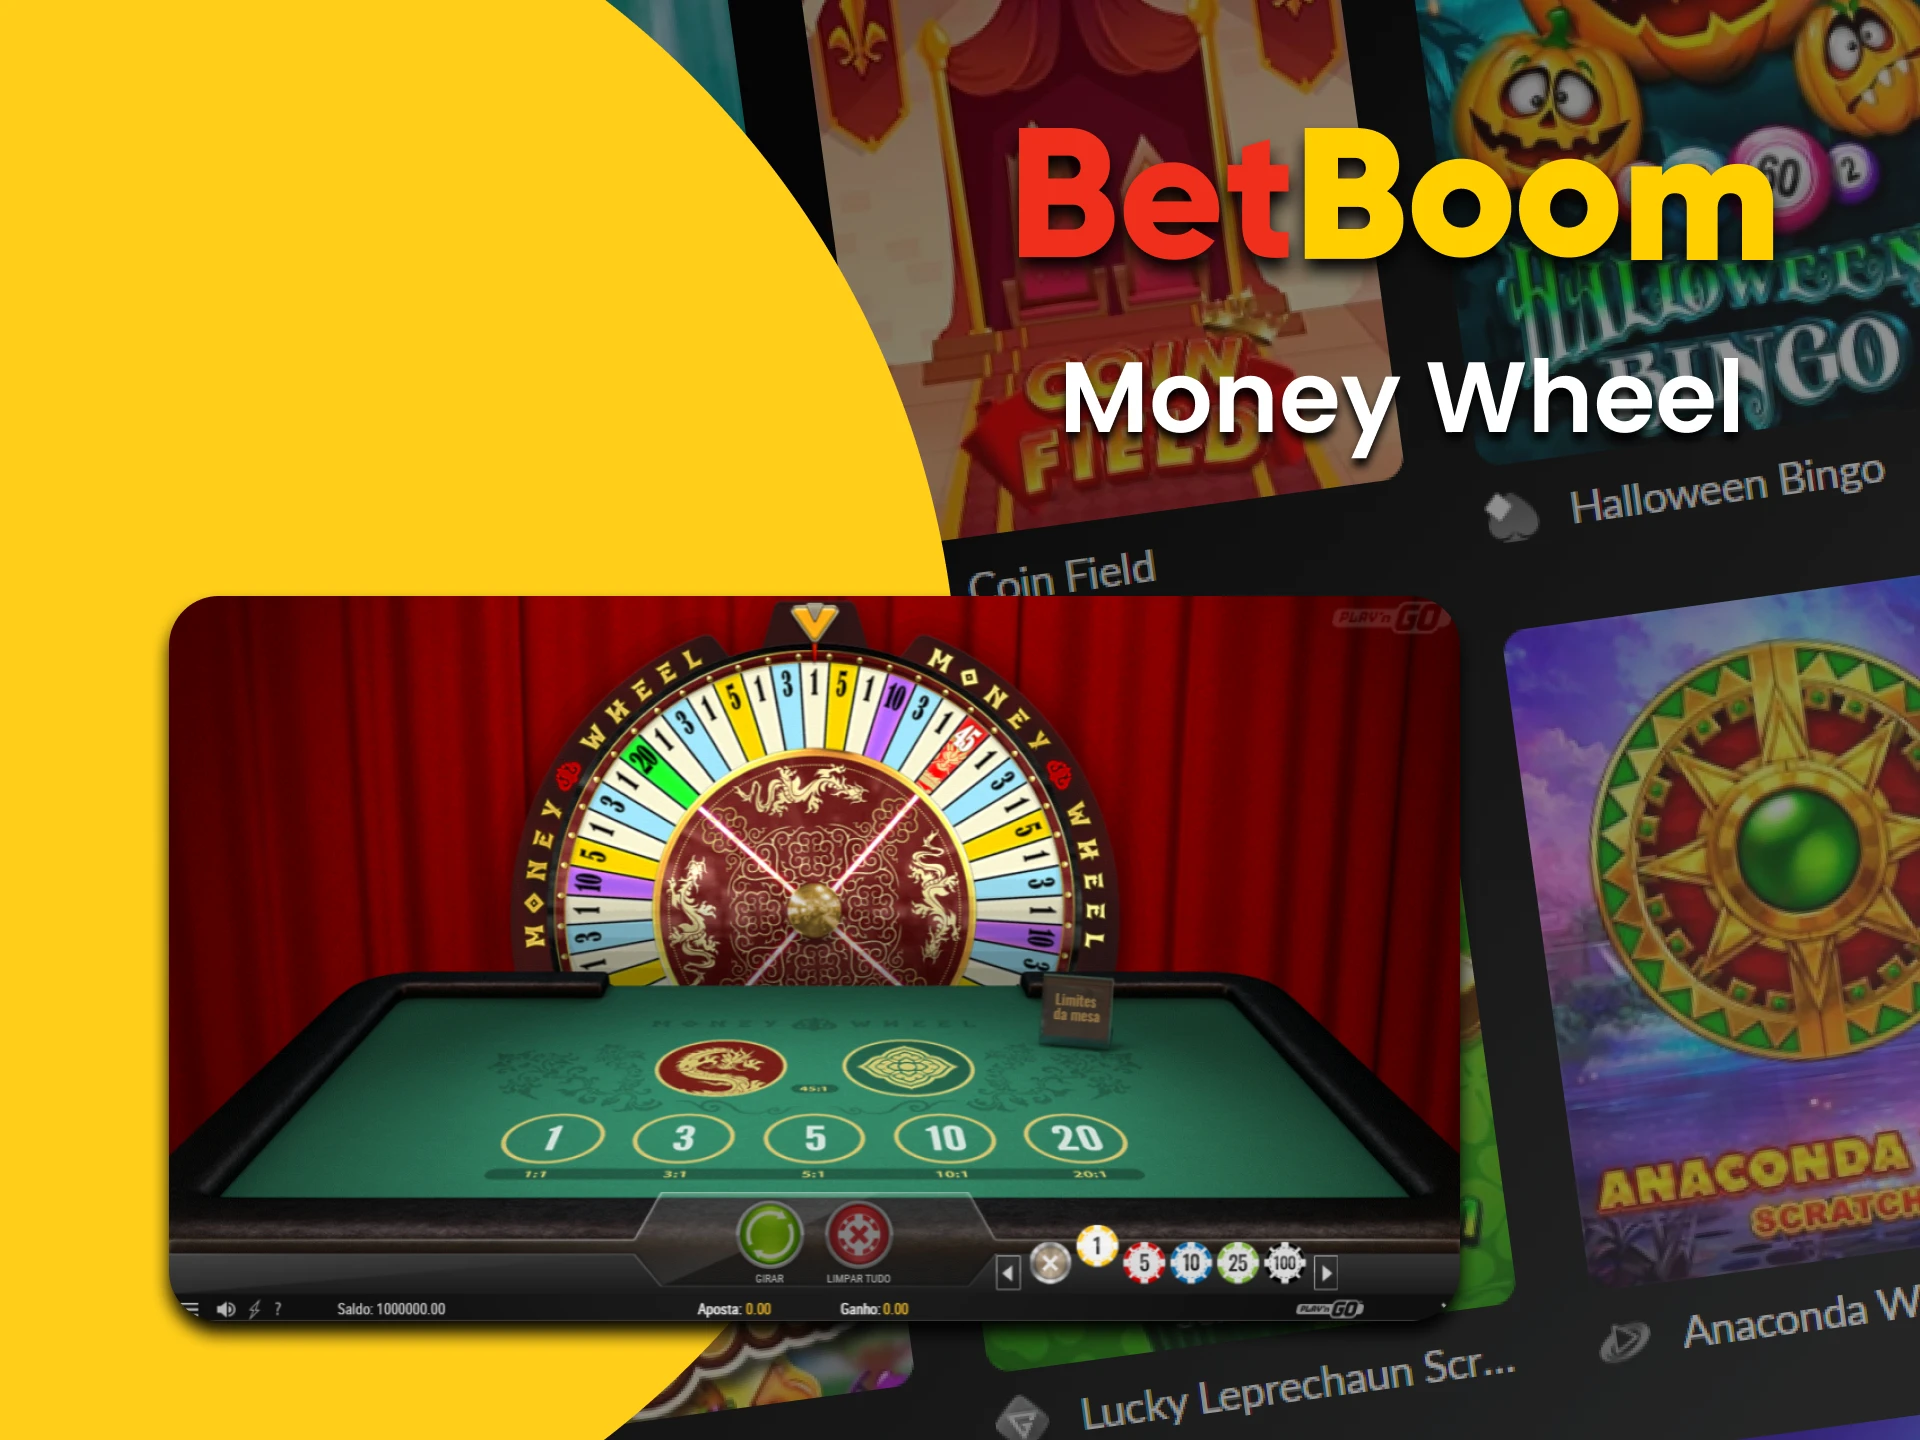 Para jogar Bingo, escolha Money Wheel no BetBoom.